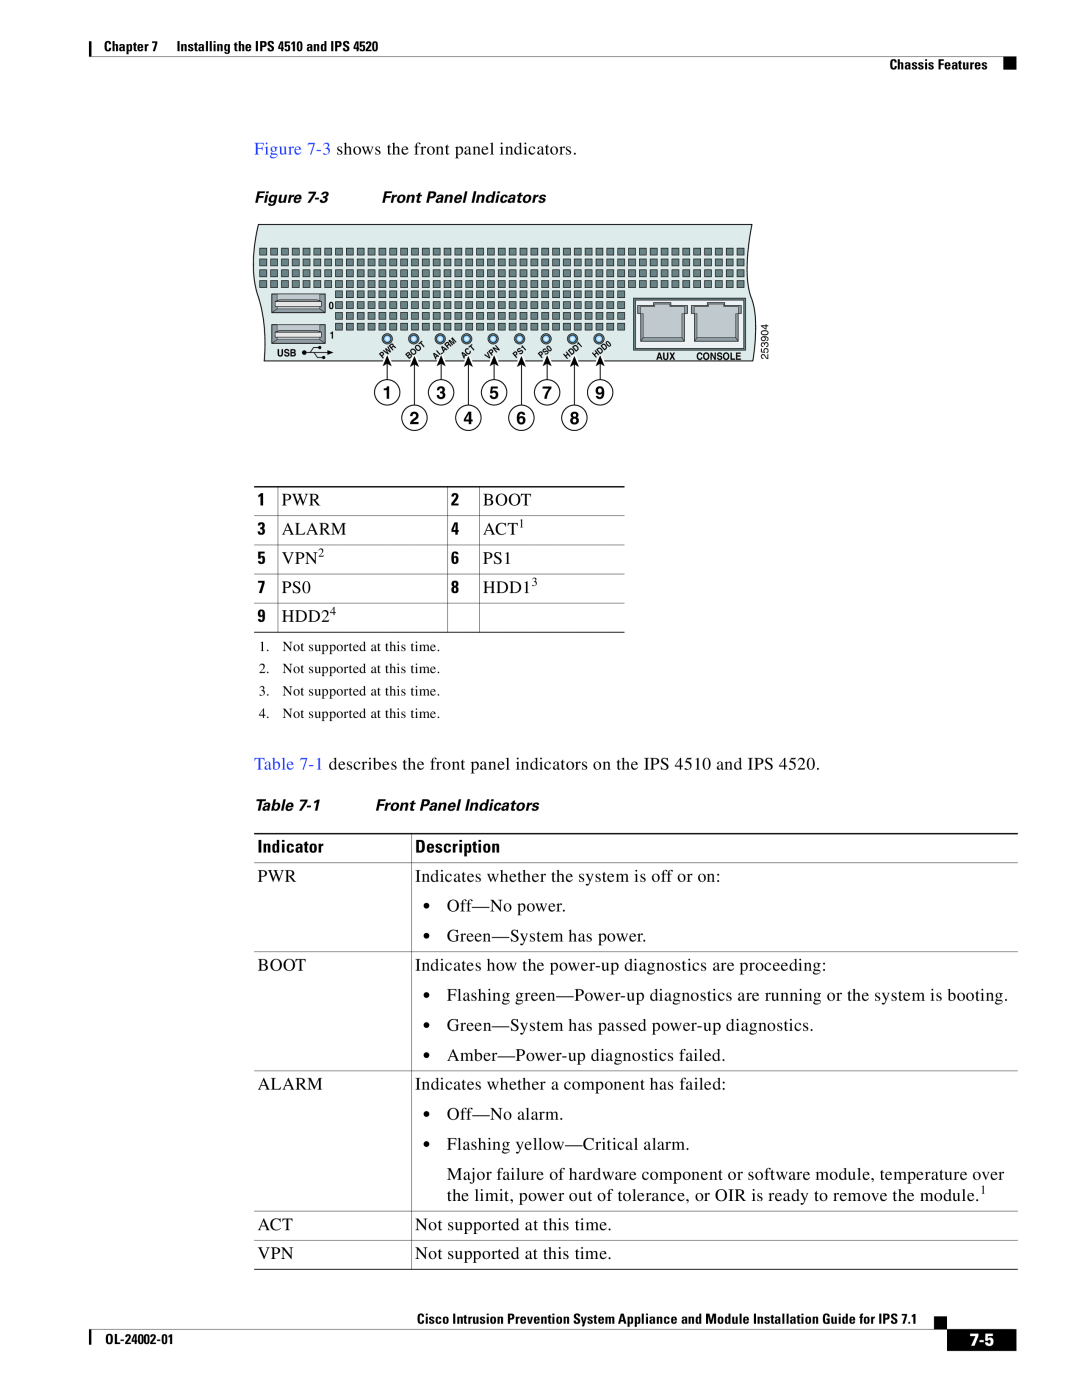 Cisco Systems IPS4520K9, IPS4510K9 specifications Indicator, Description 